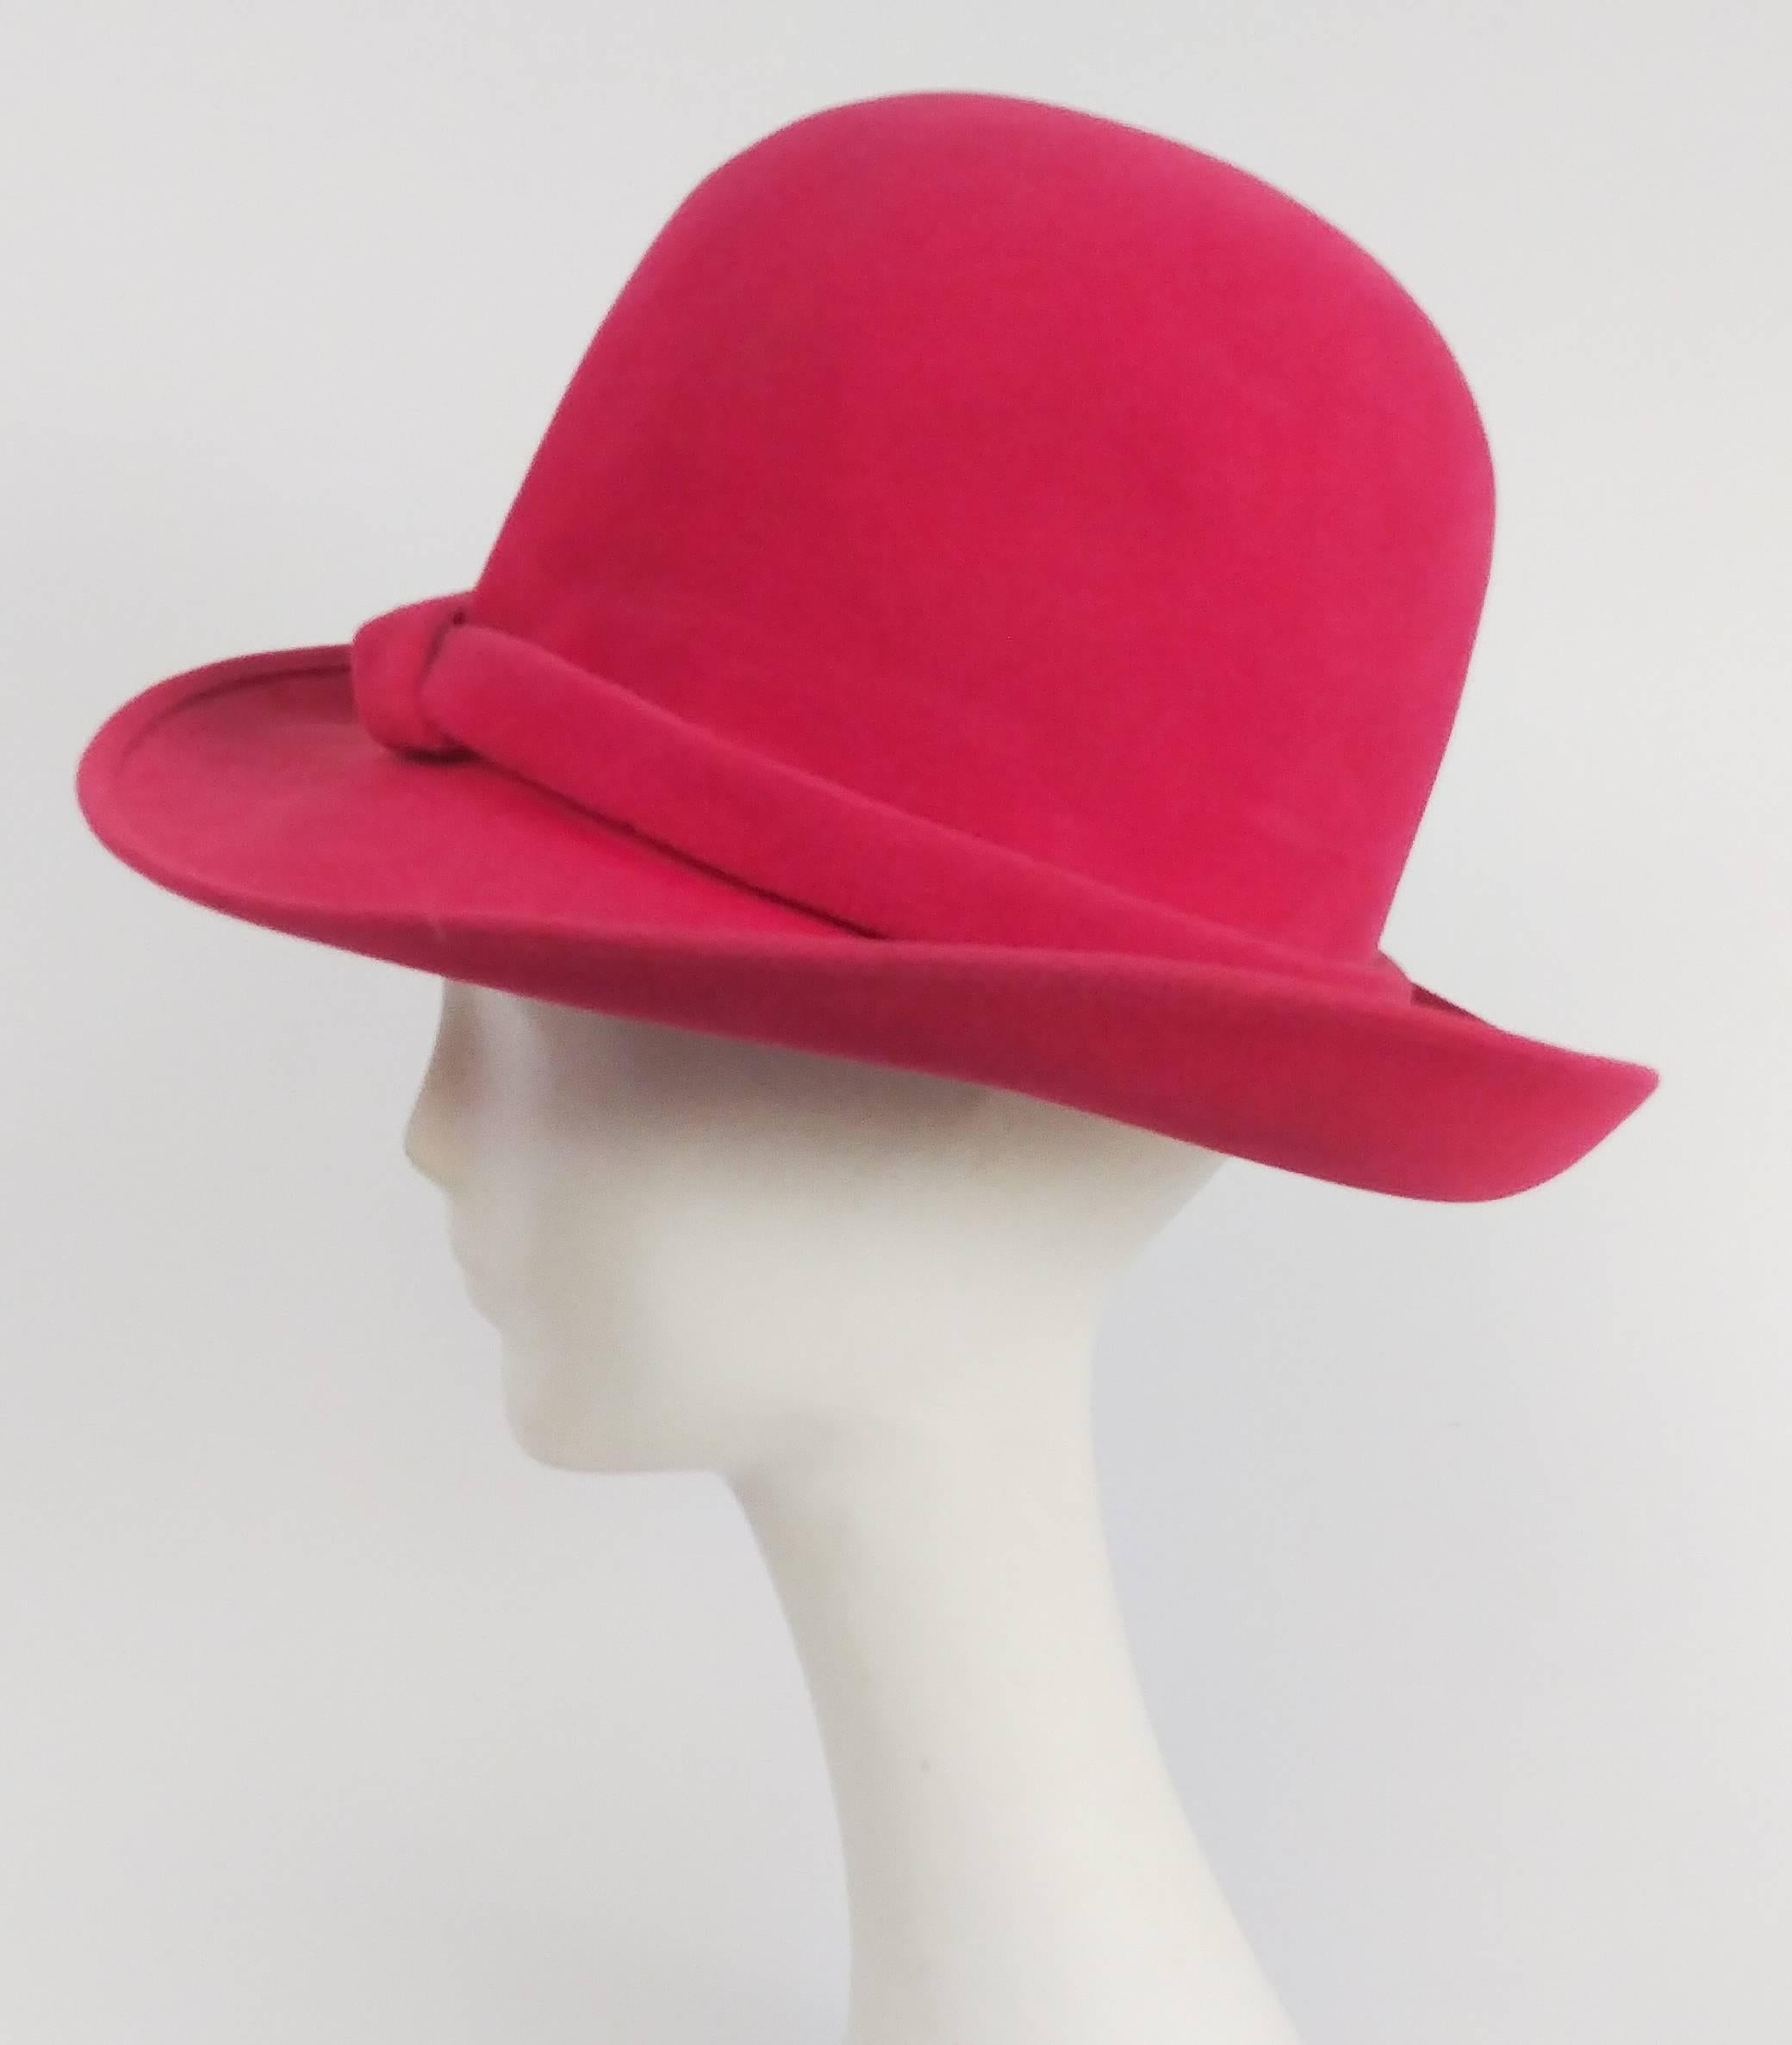 hot pink felt hat